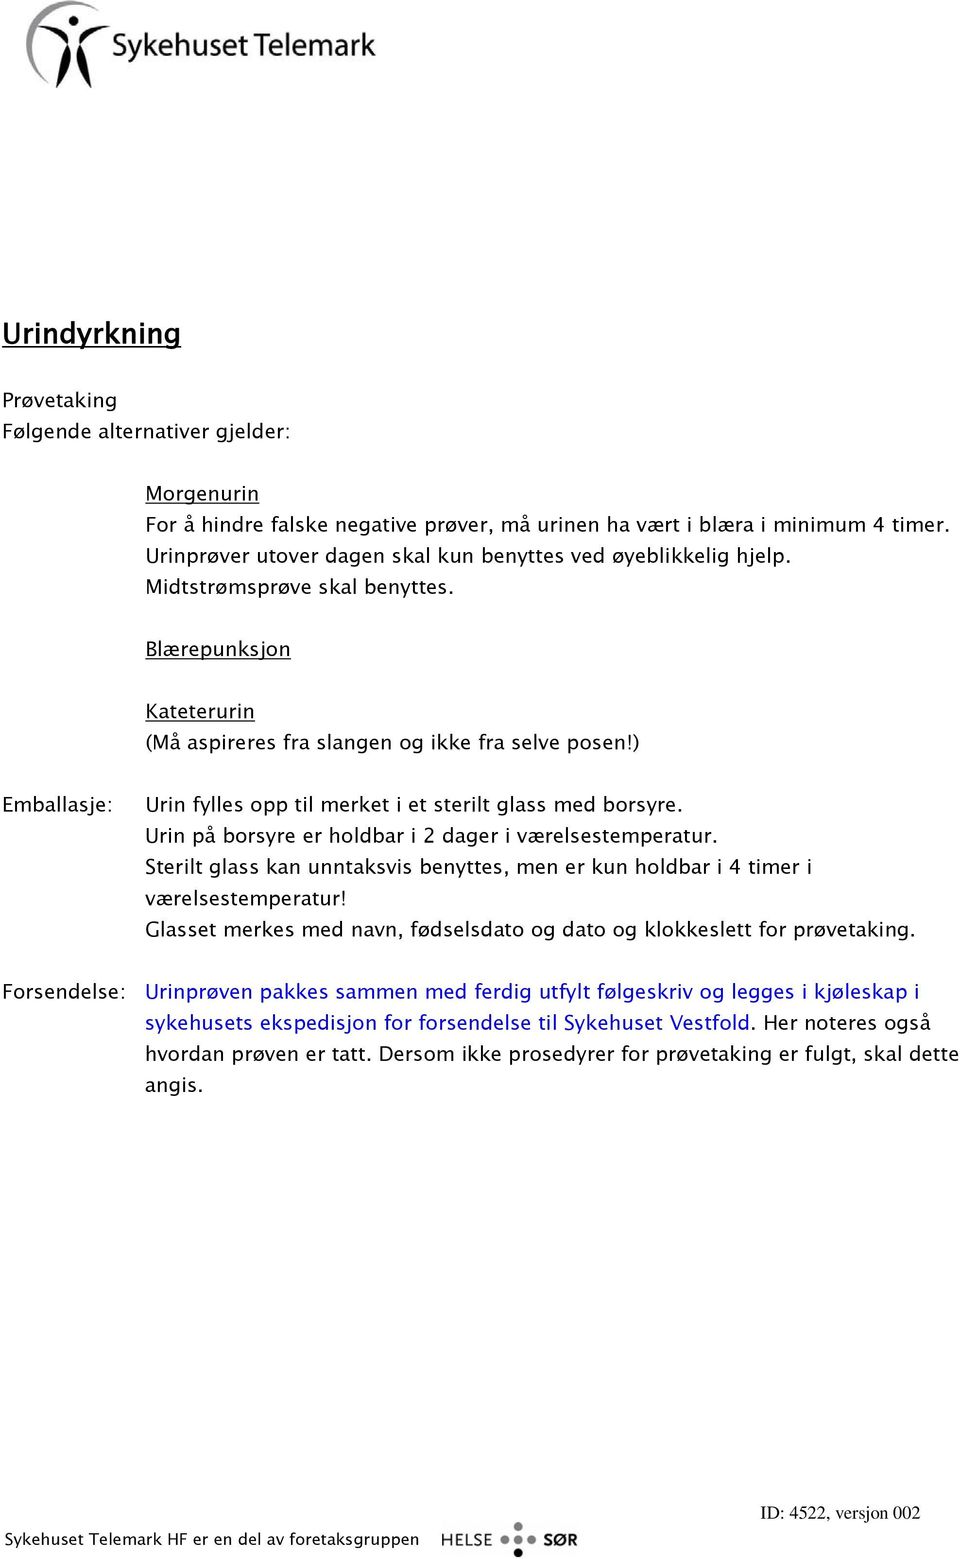 Urinsamling uten tilsetning. Urinsamling til mikroalbumin. Urinsamling for  analyse av katekolaminer, VMA og 5-HIAA. Urindyrkning - PDF Free Download